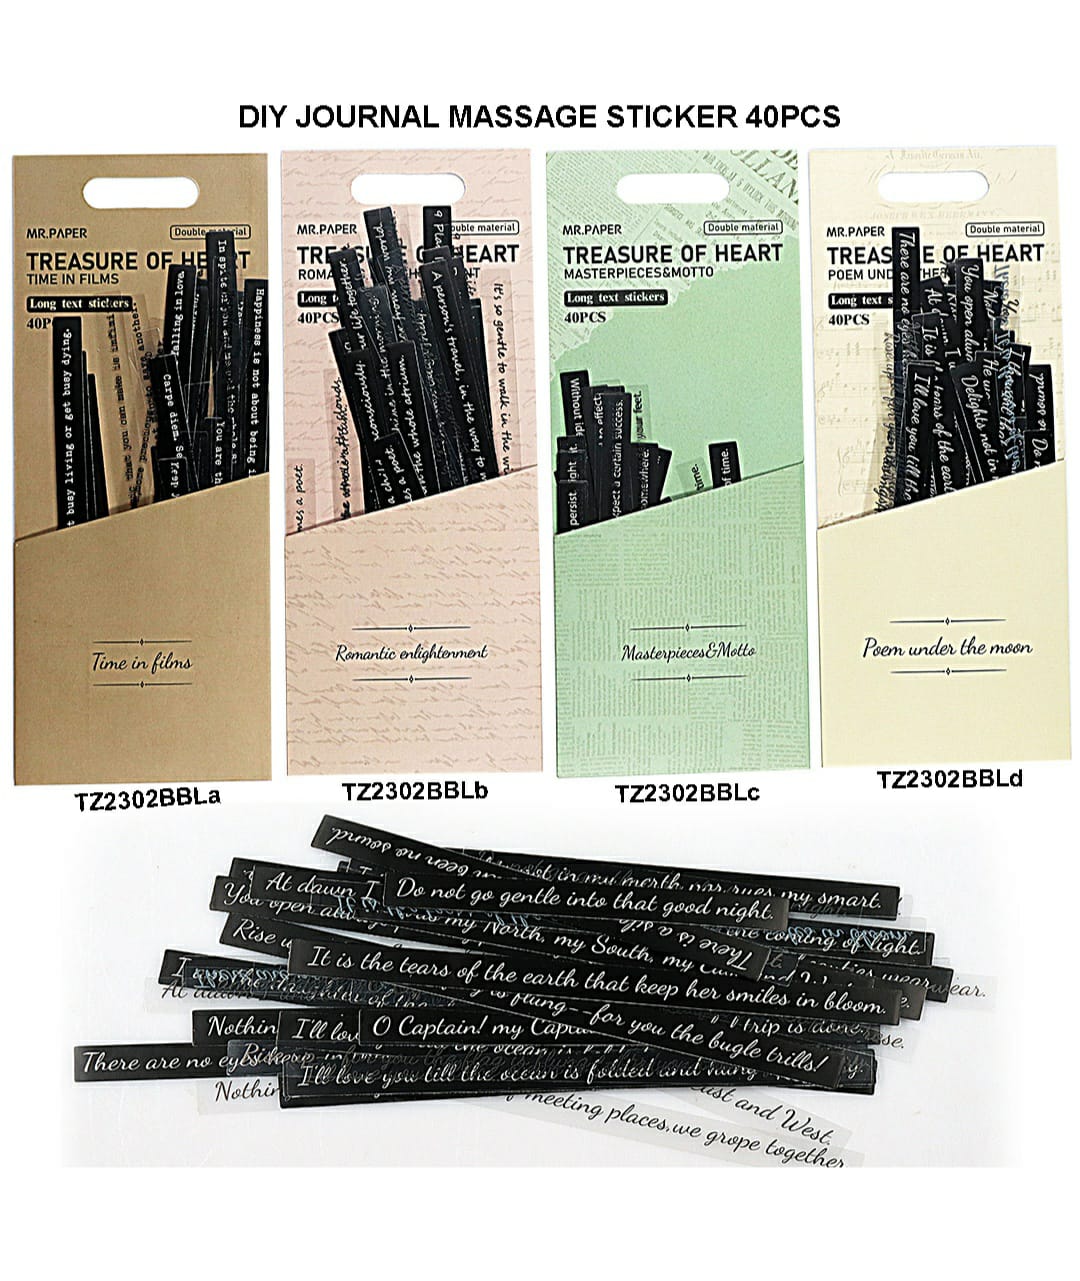 Diy Journal Massage Sticker 40Pcs 294 Tz2302Bbl | INKARTO